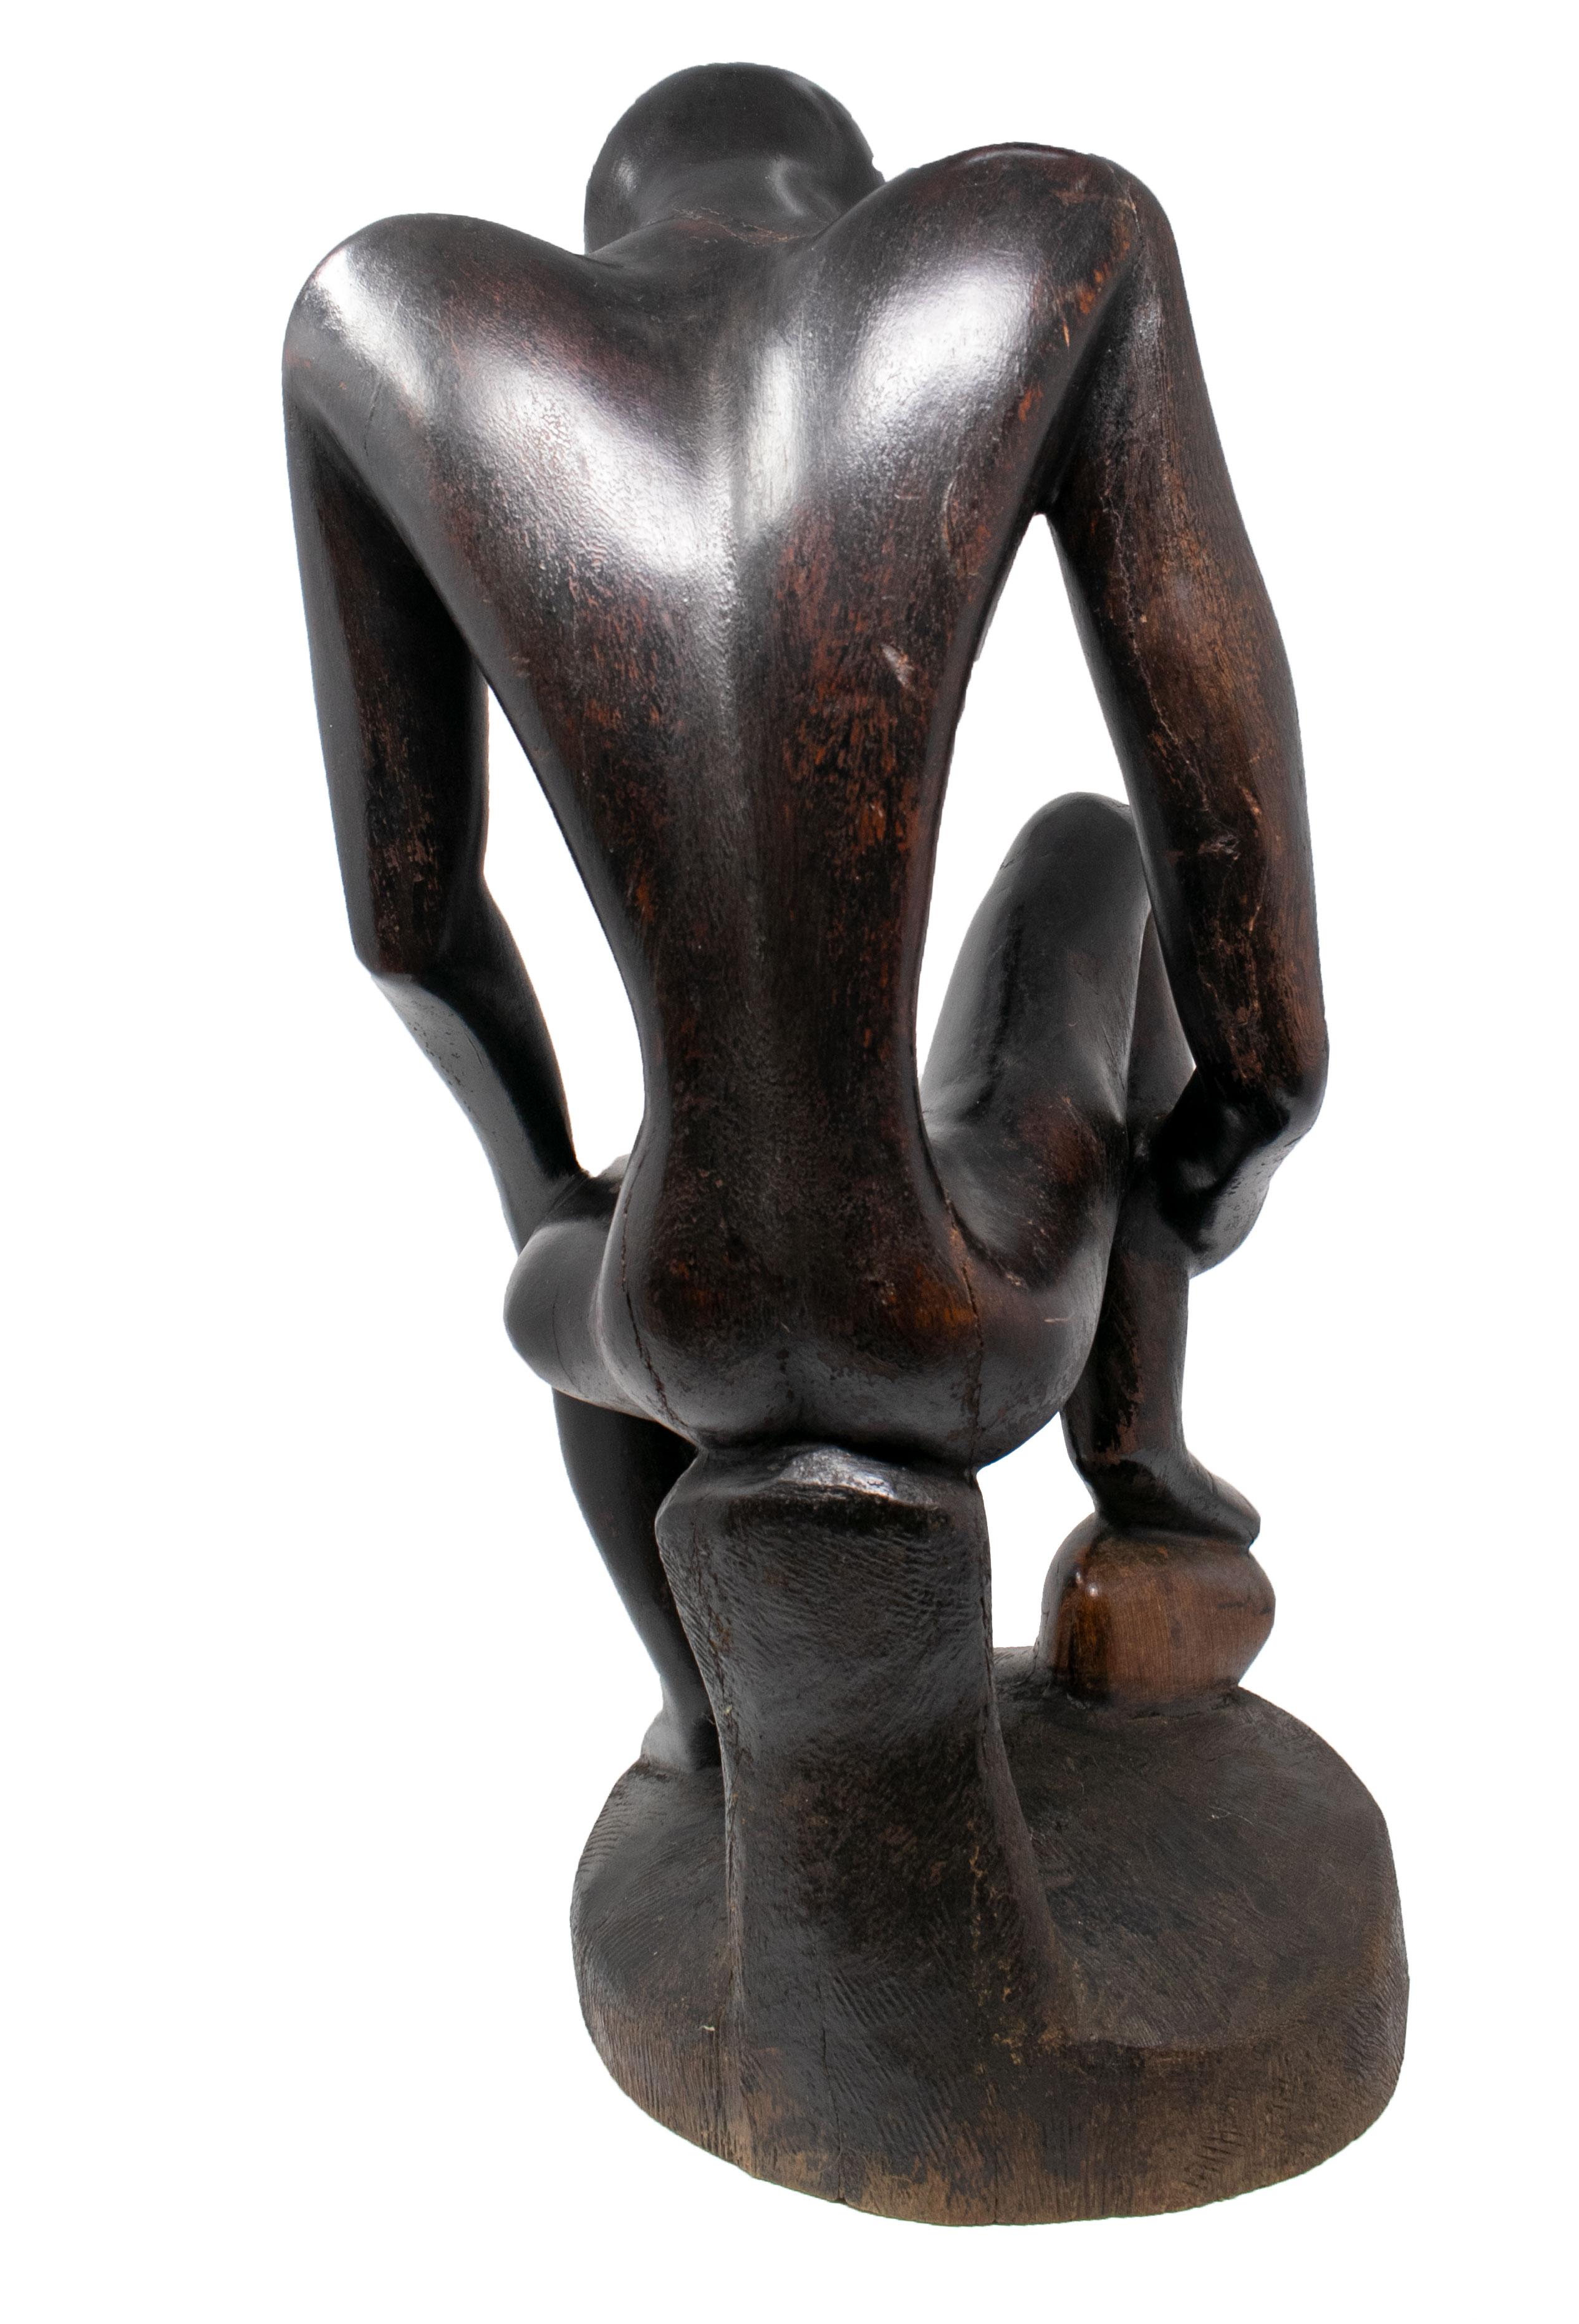 sitting man sculpture